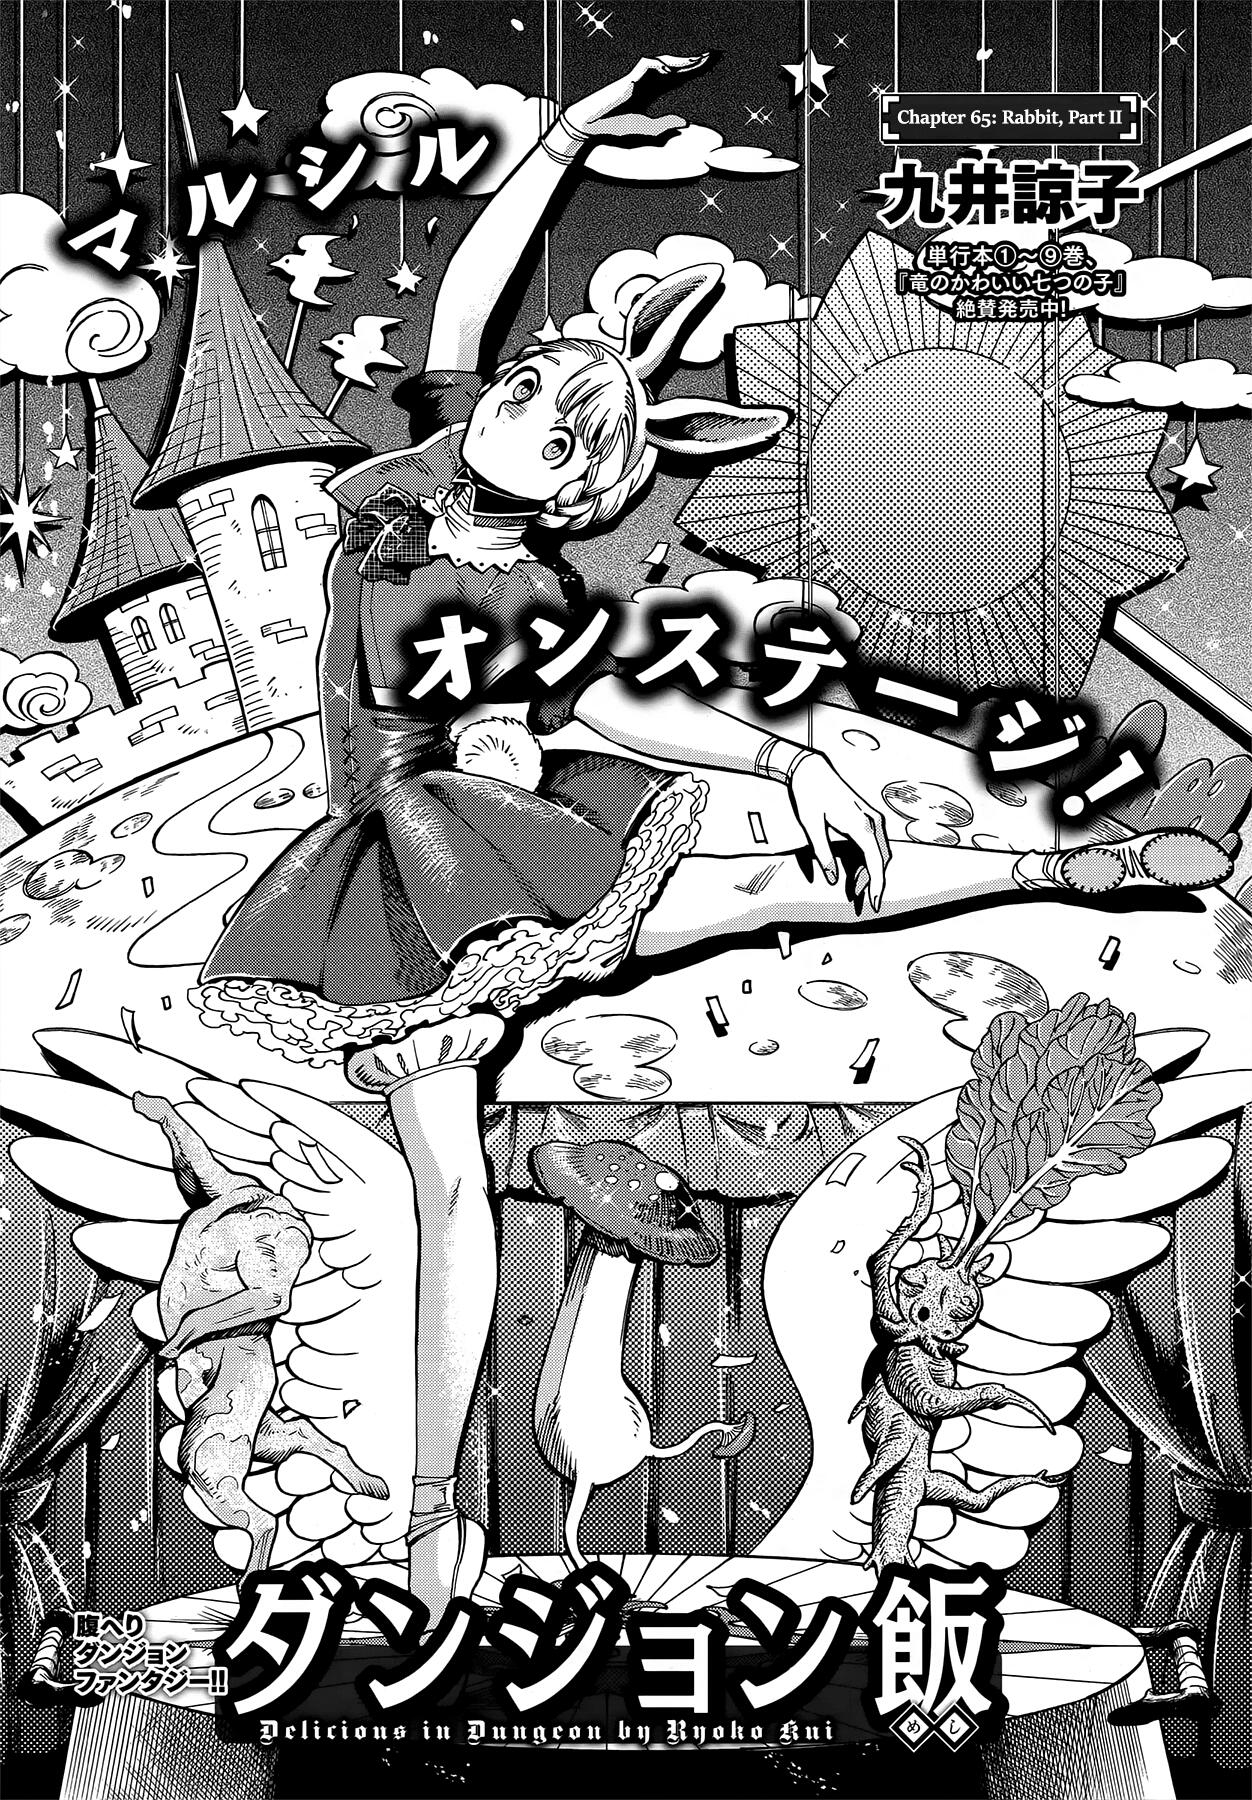 Dungeon Meshi Chapter 65: Rabbit, Part Ii page 1 - Mangakakalot